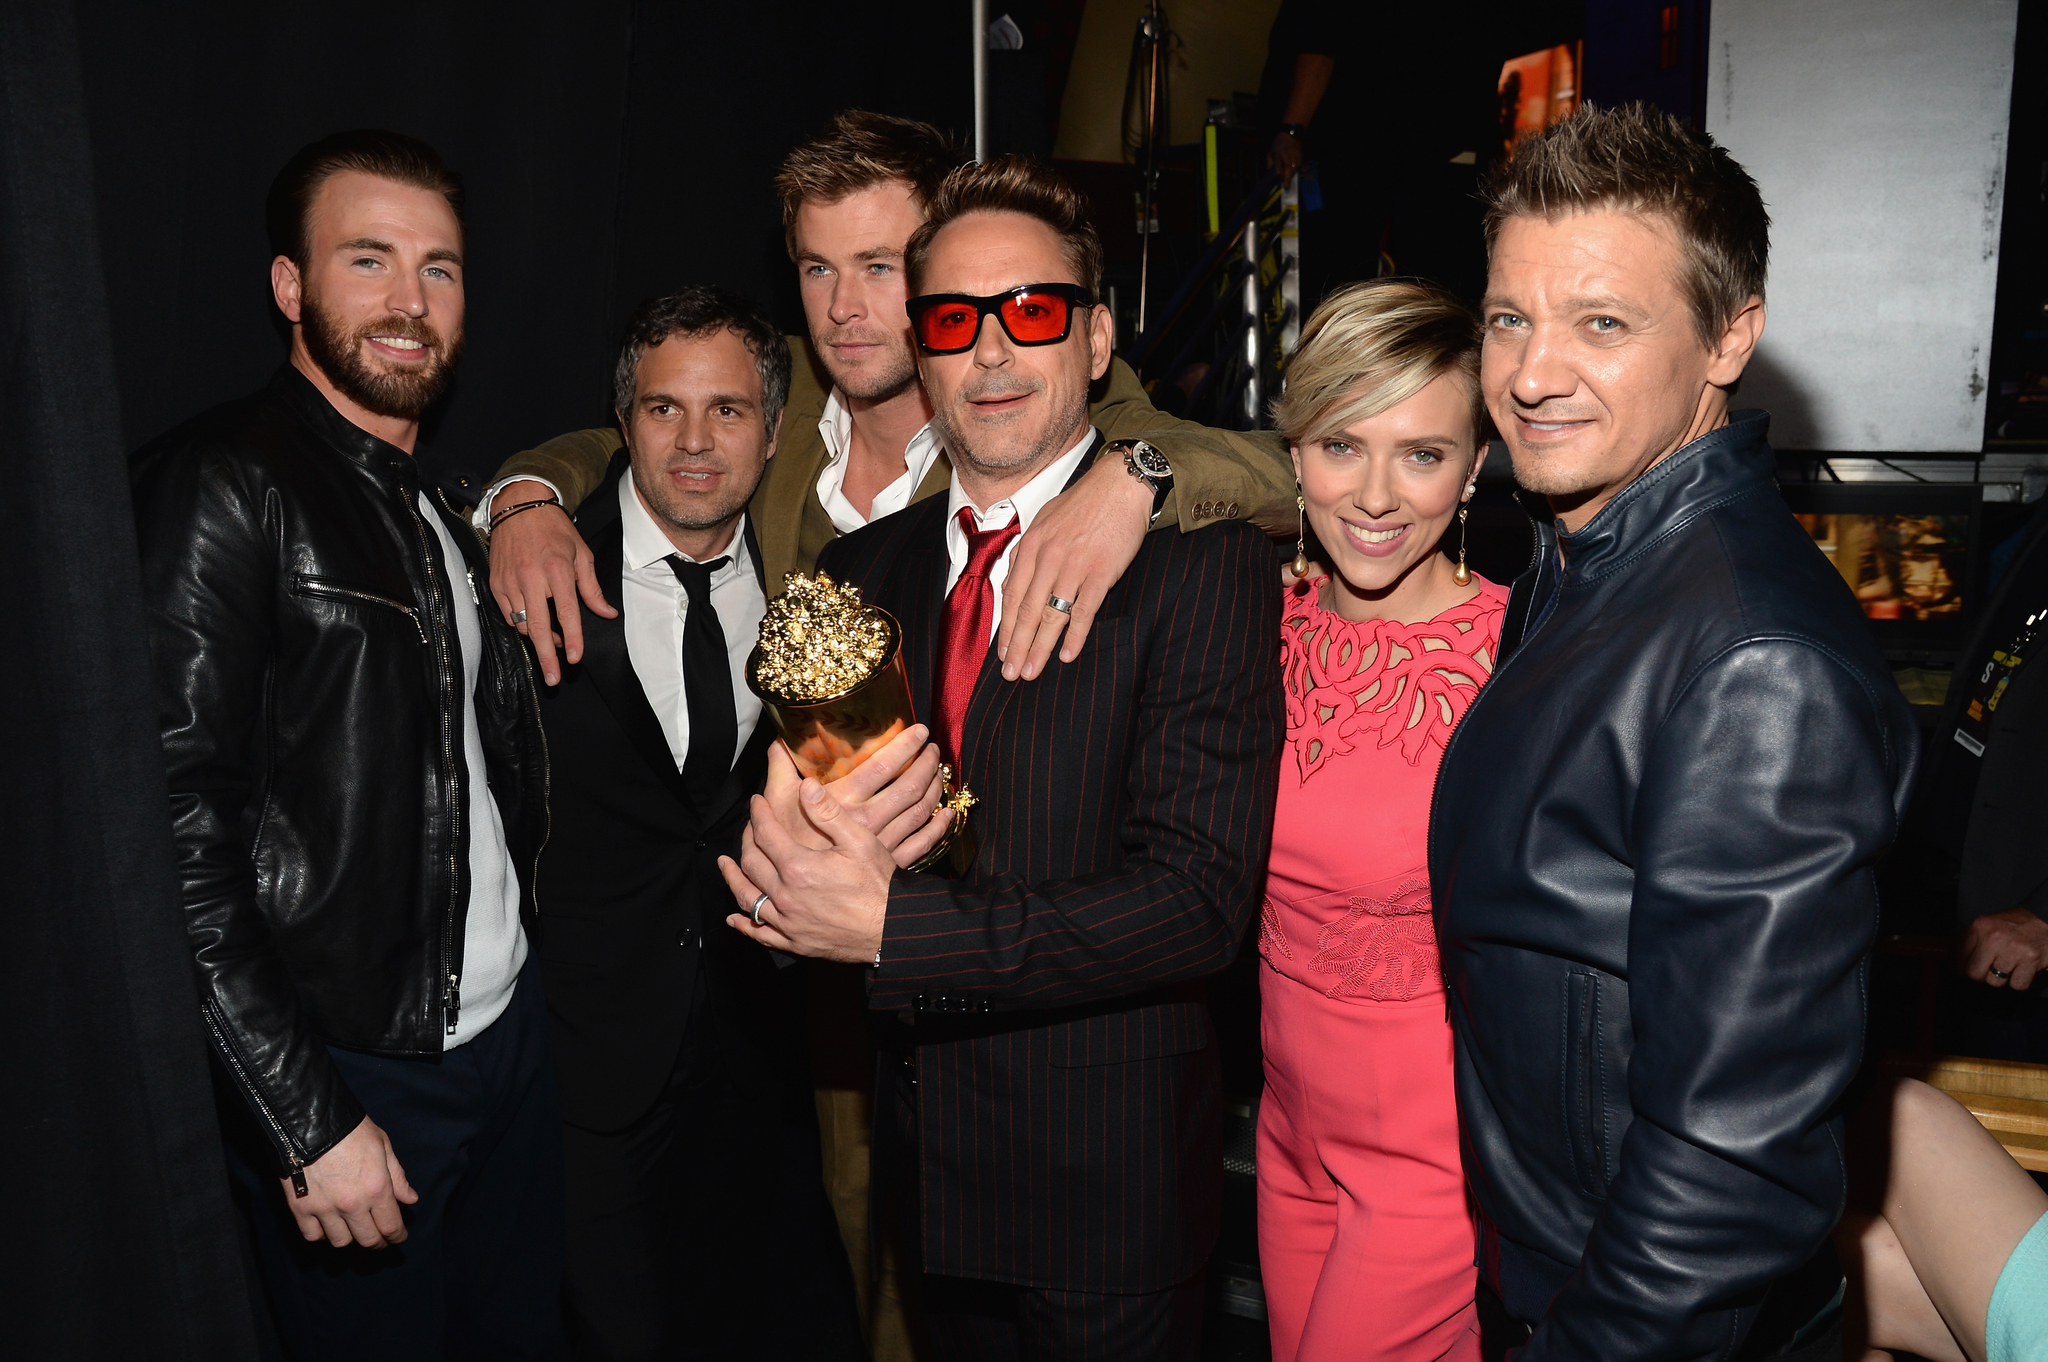 Robert Downey Jr., Chris Evans, Scarlett Johansson, Jeremy Renner, Mark Ruffalo and Chris Hemsworth